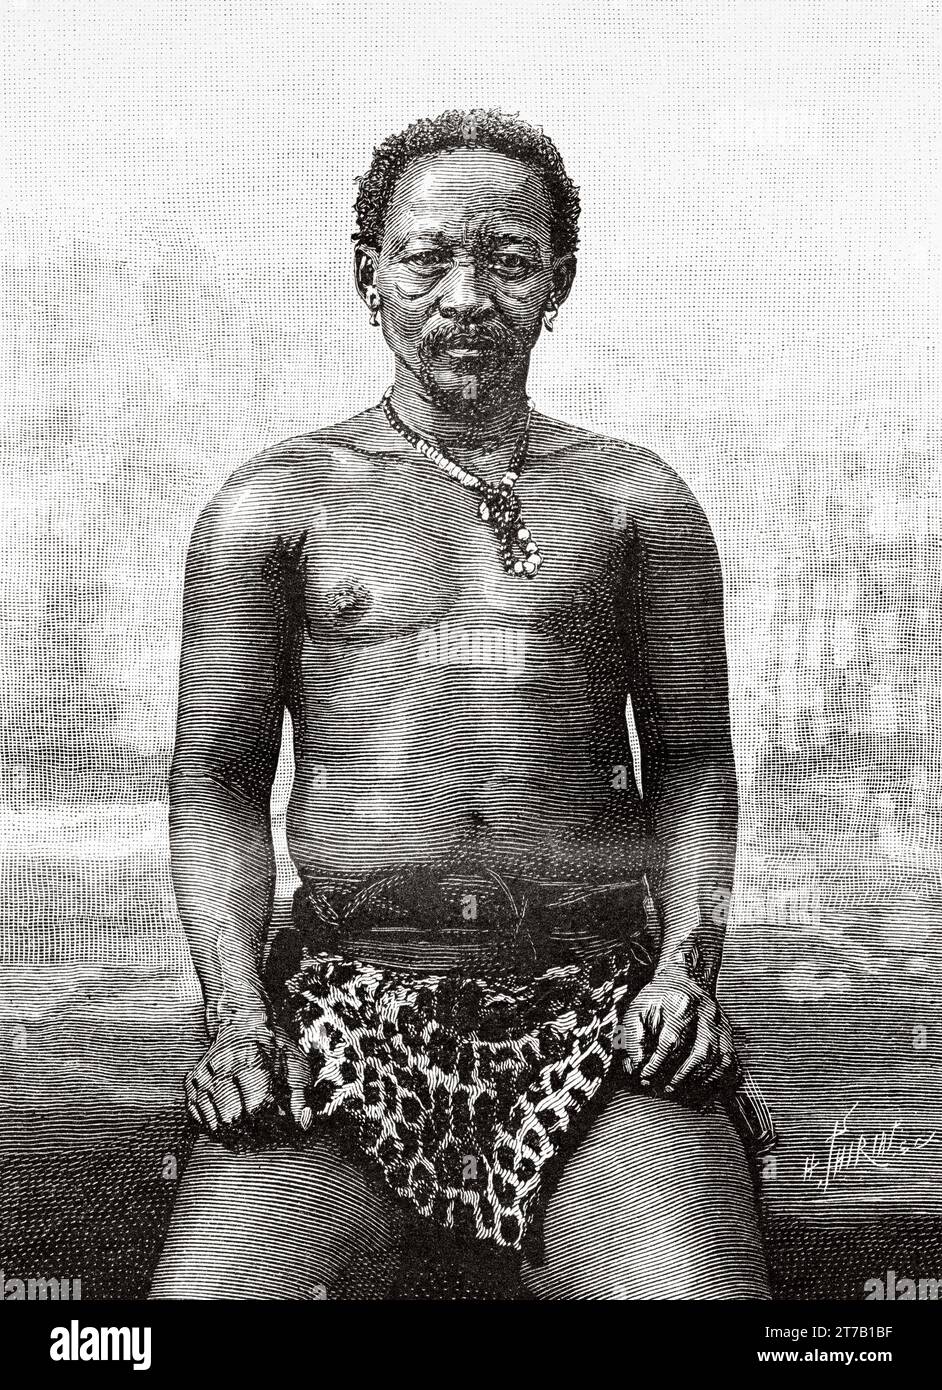 Portrait of a Bushman man. Old illustration from La Nature 1887 Stock Photo